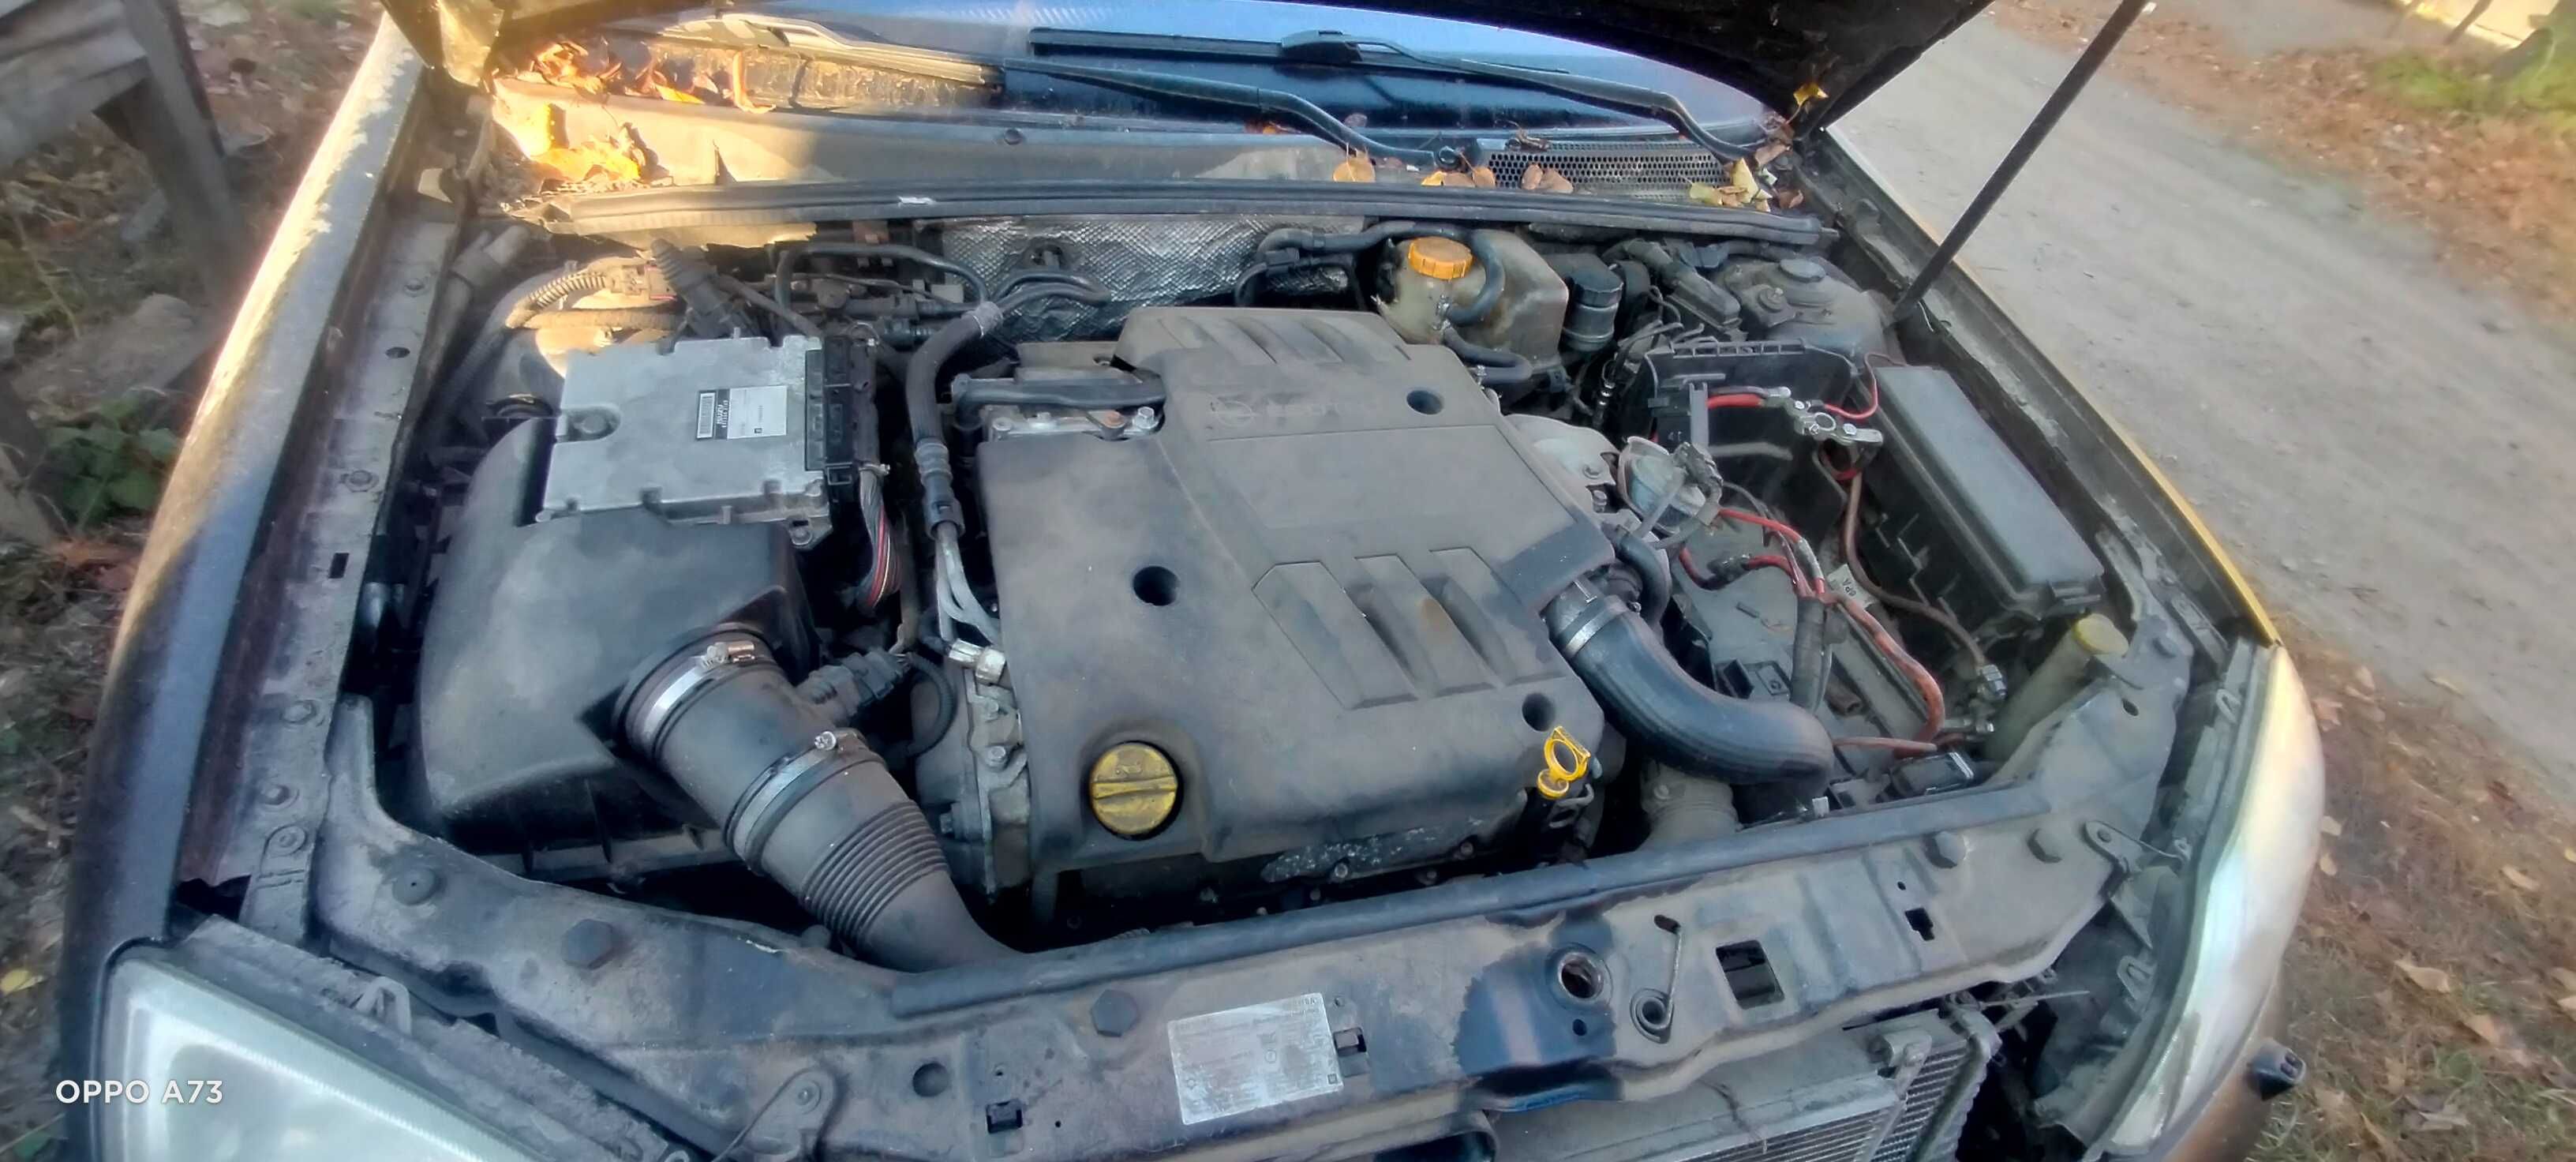 Мотор двигатель АКПП датчик Опель сигнум Opel signum 3.0